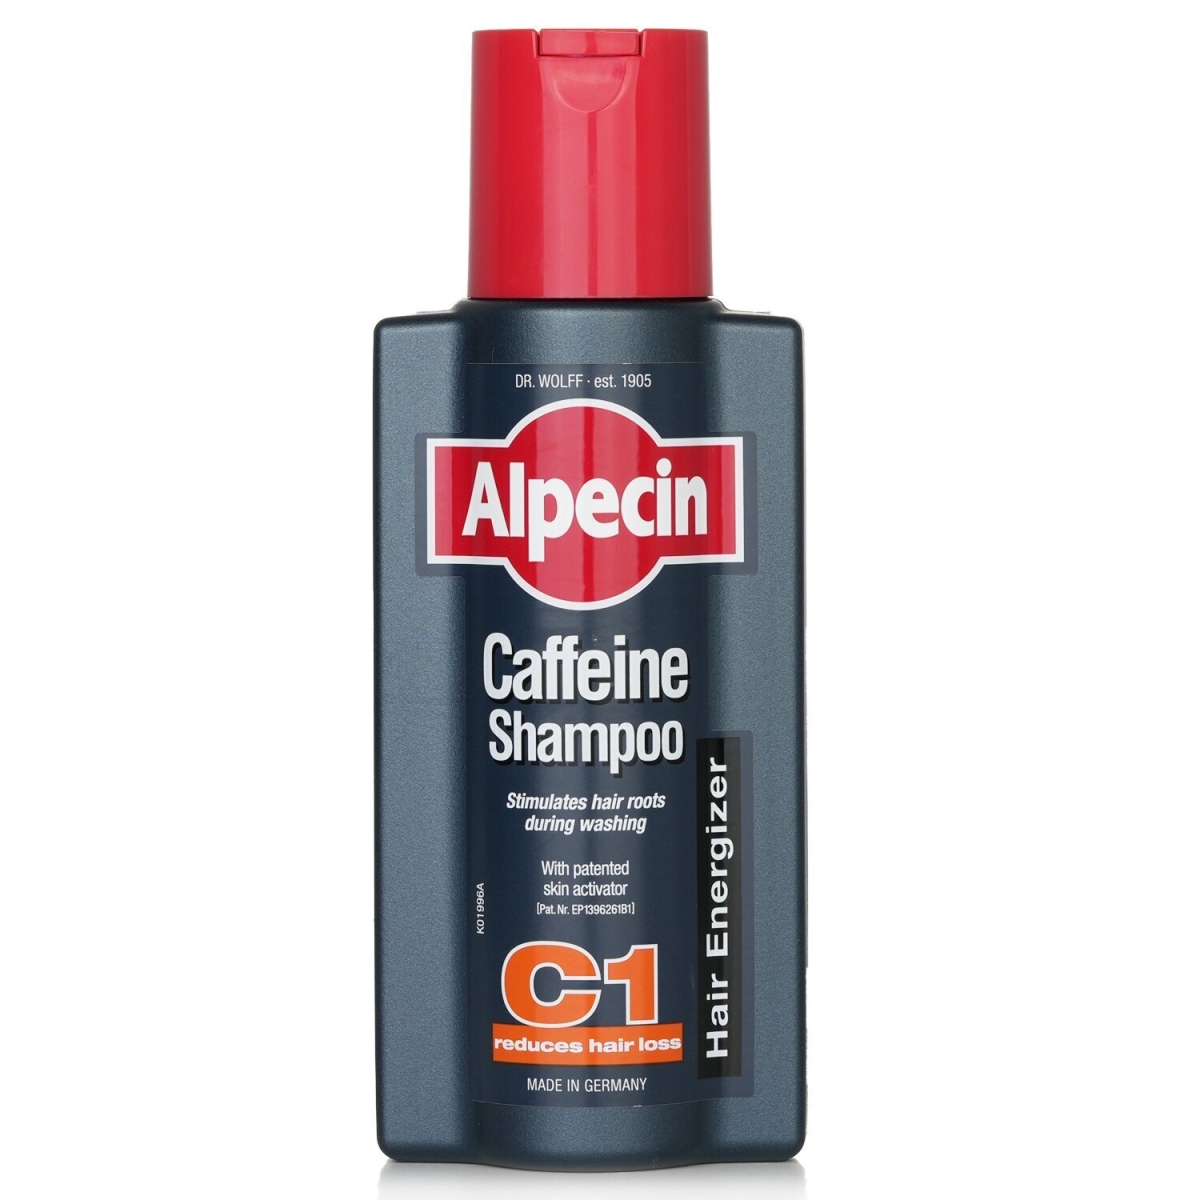 Picture of Alpecin 295624 250 ml C1 Caffeine Hair Shampoo for Reduces Hair Loss